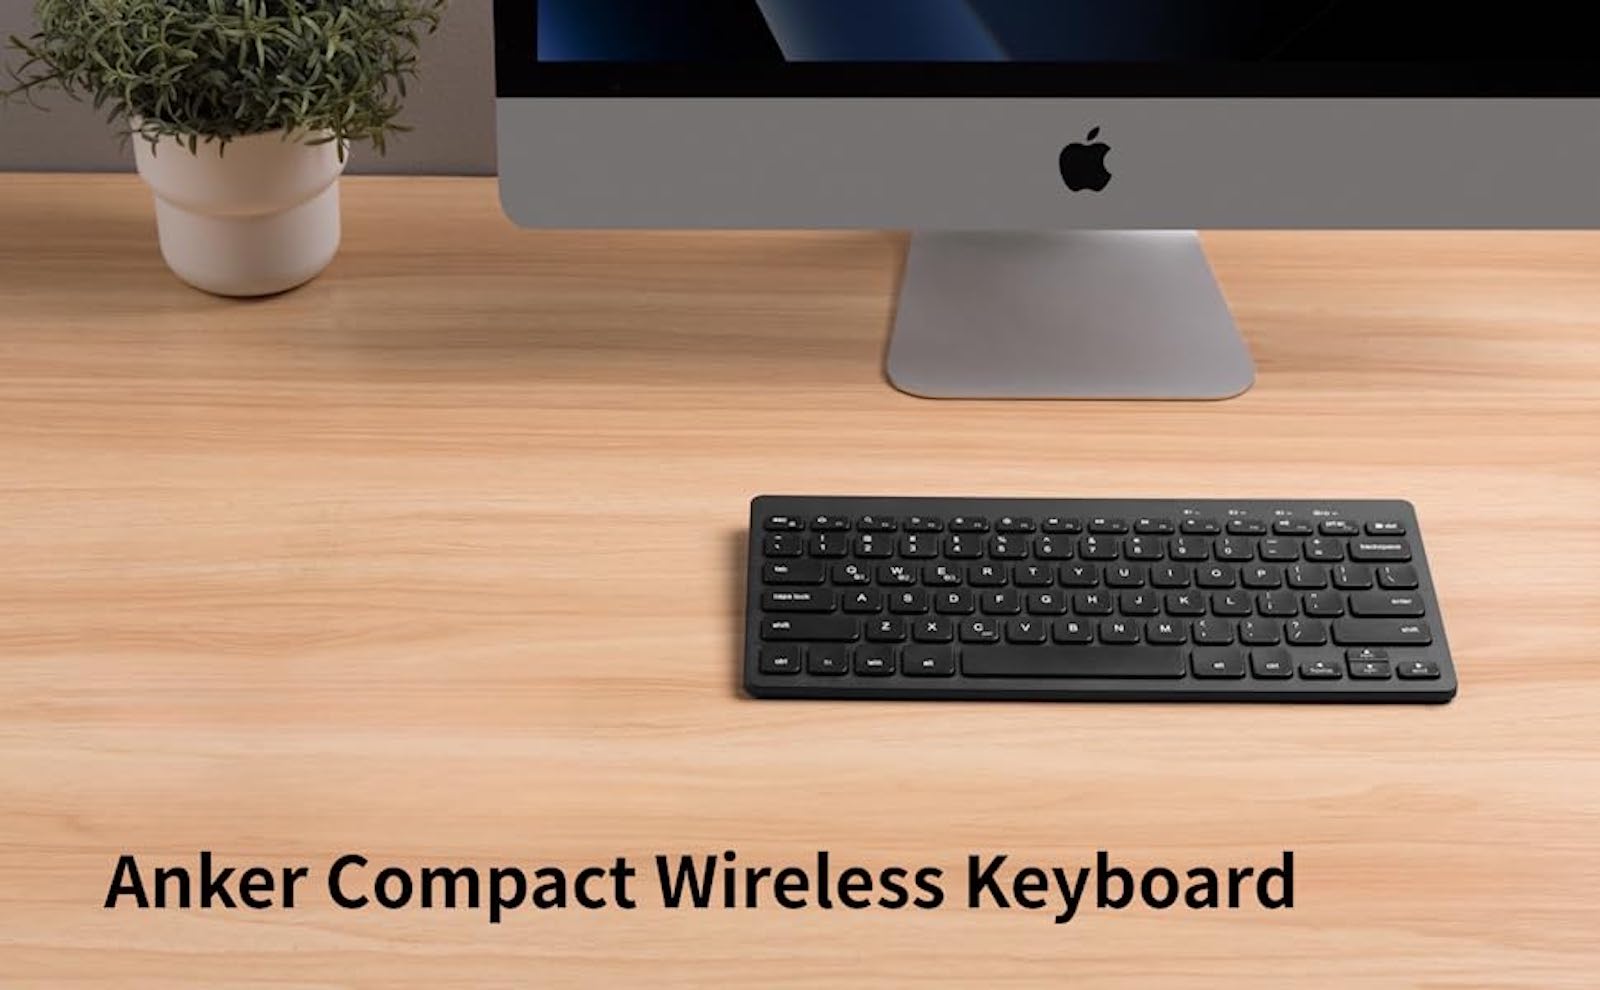 Anker compact wireless keyboard